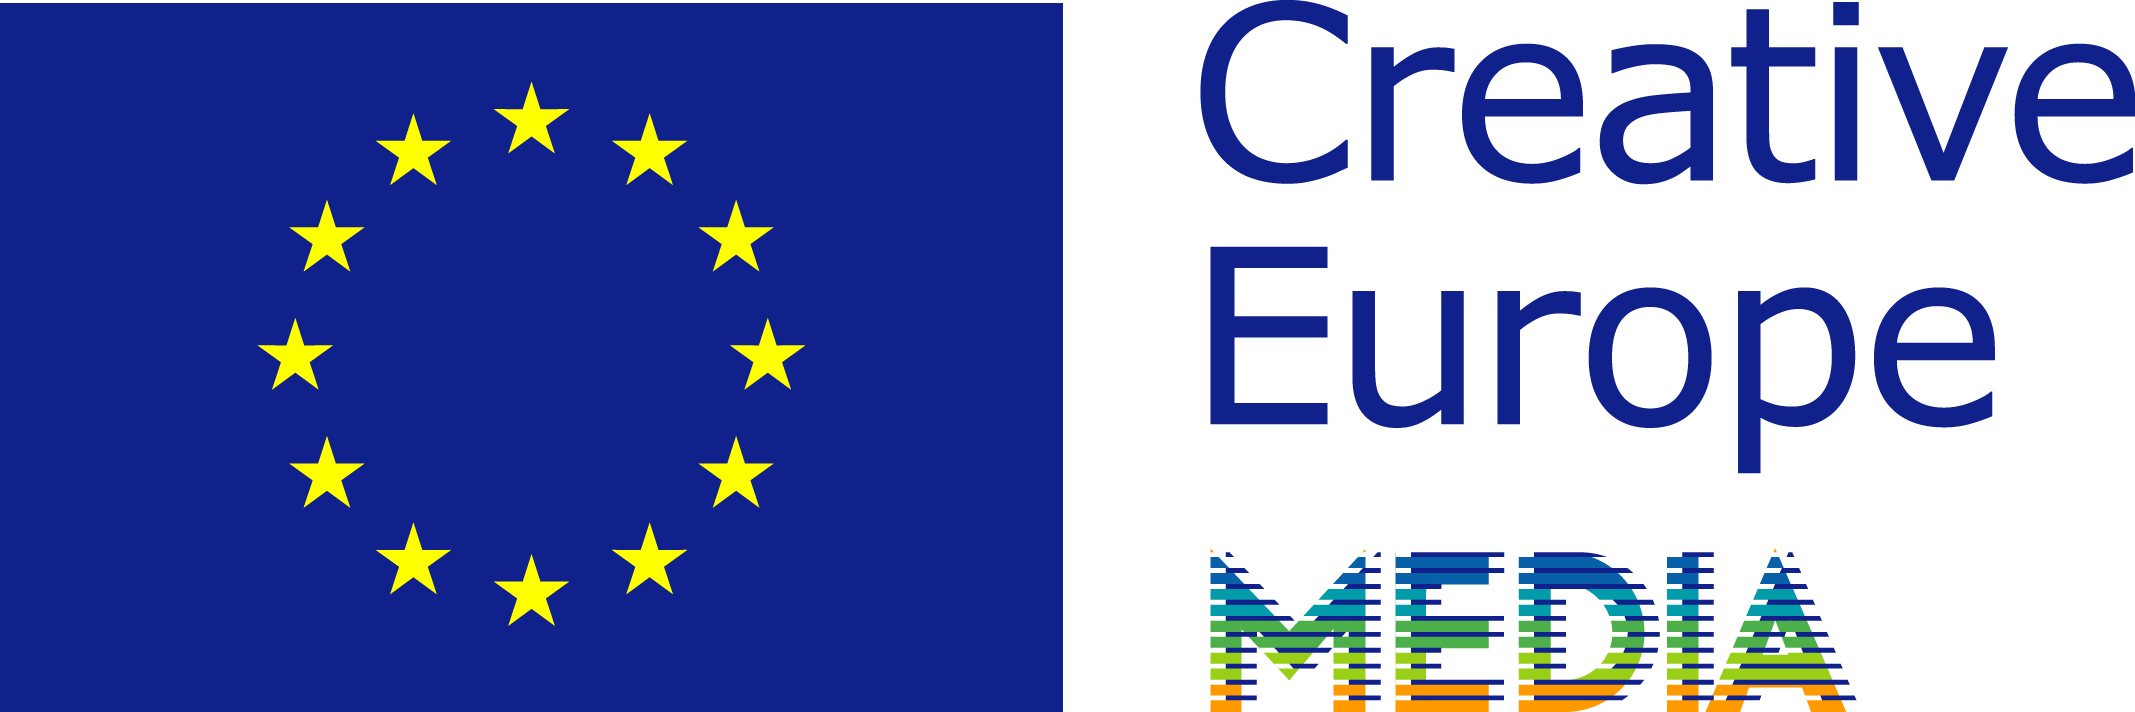 Europe-Creative-Media.png